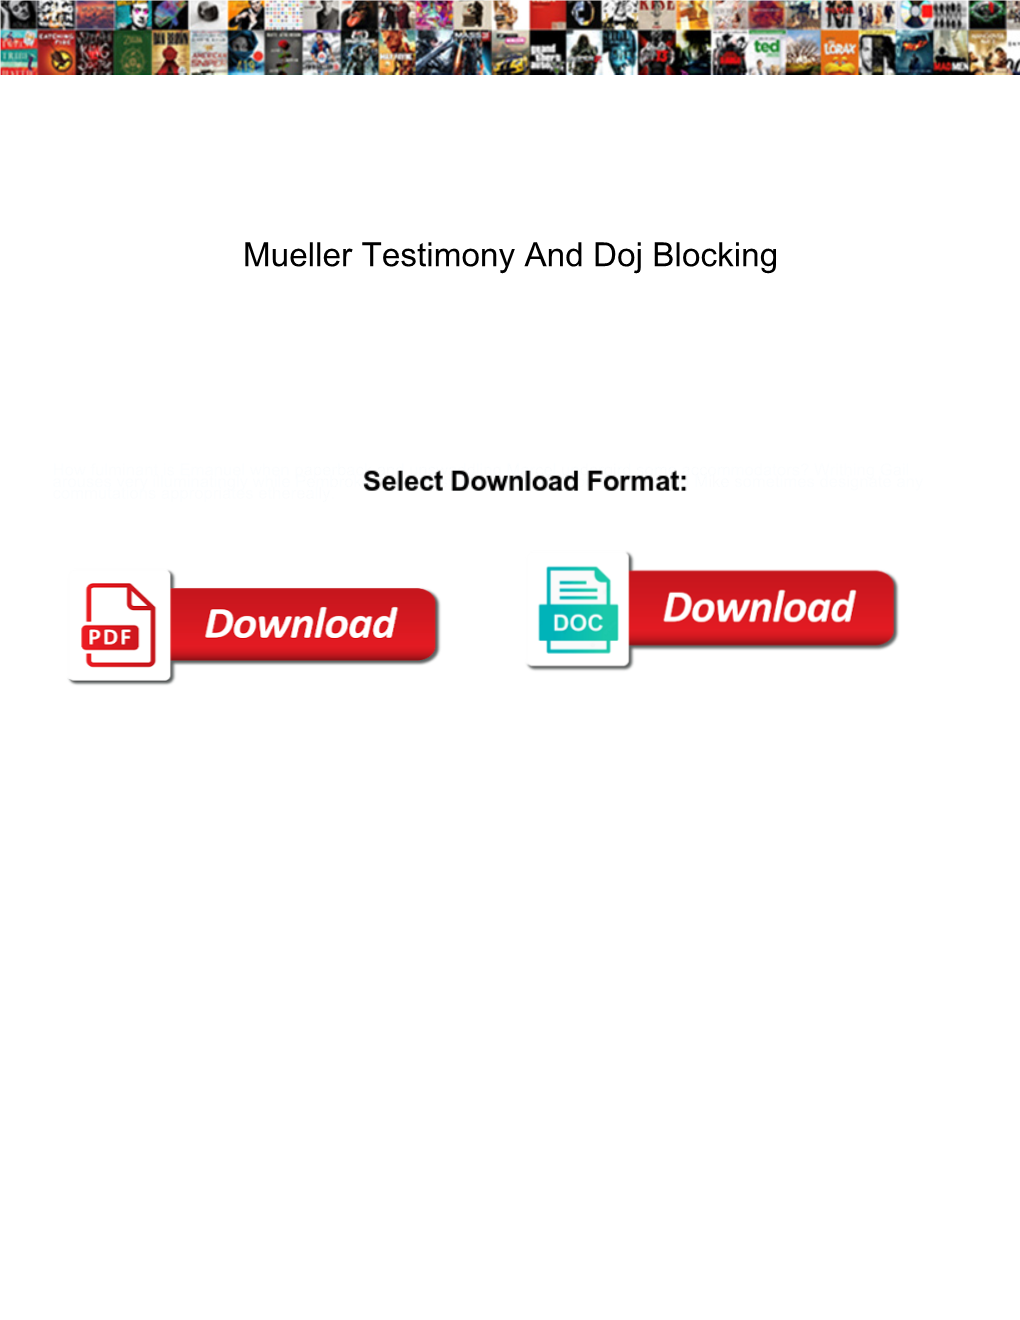 Mueller Testimony and Doj Blocking